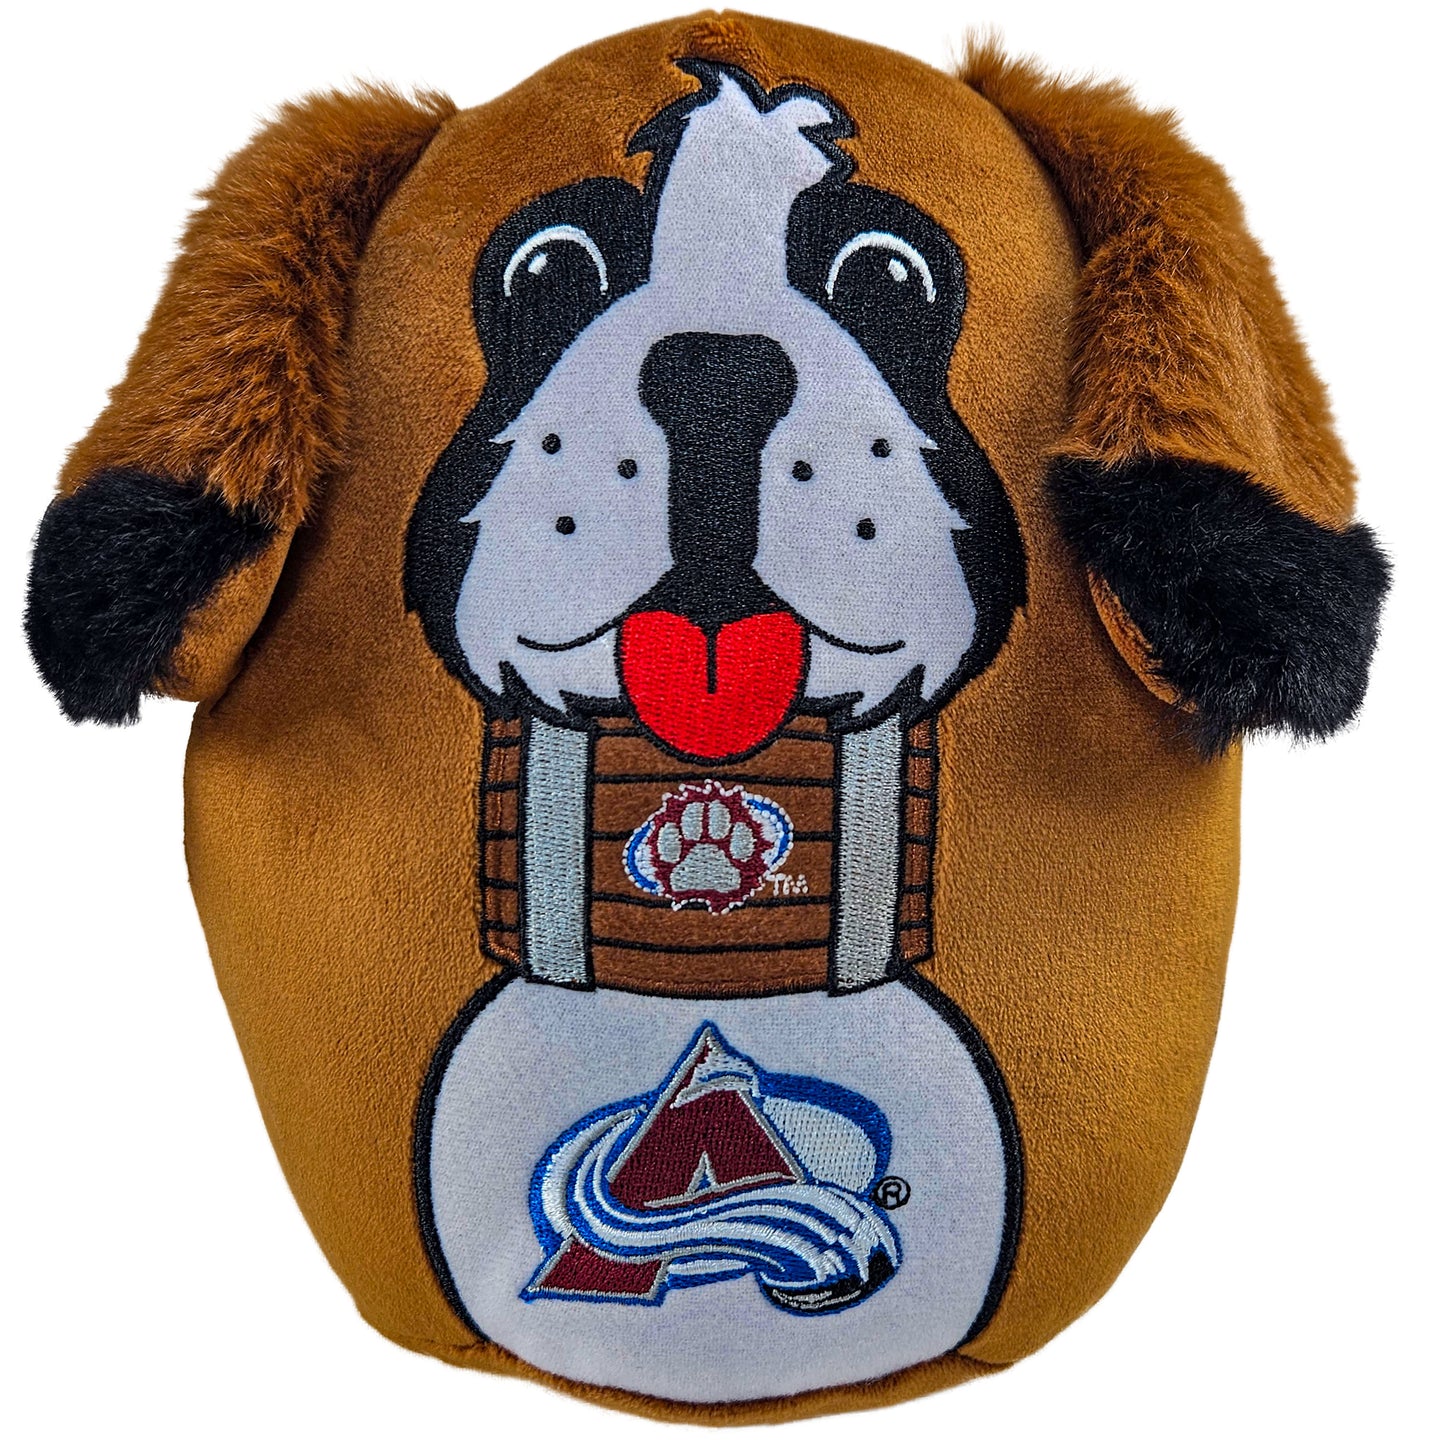 Avalanche Squishy Mascot Bernie